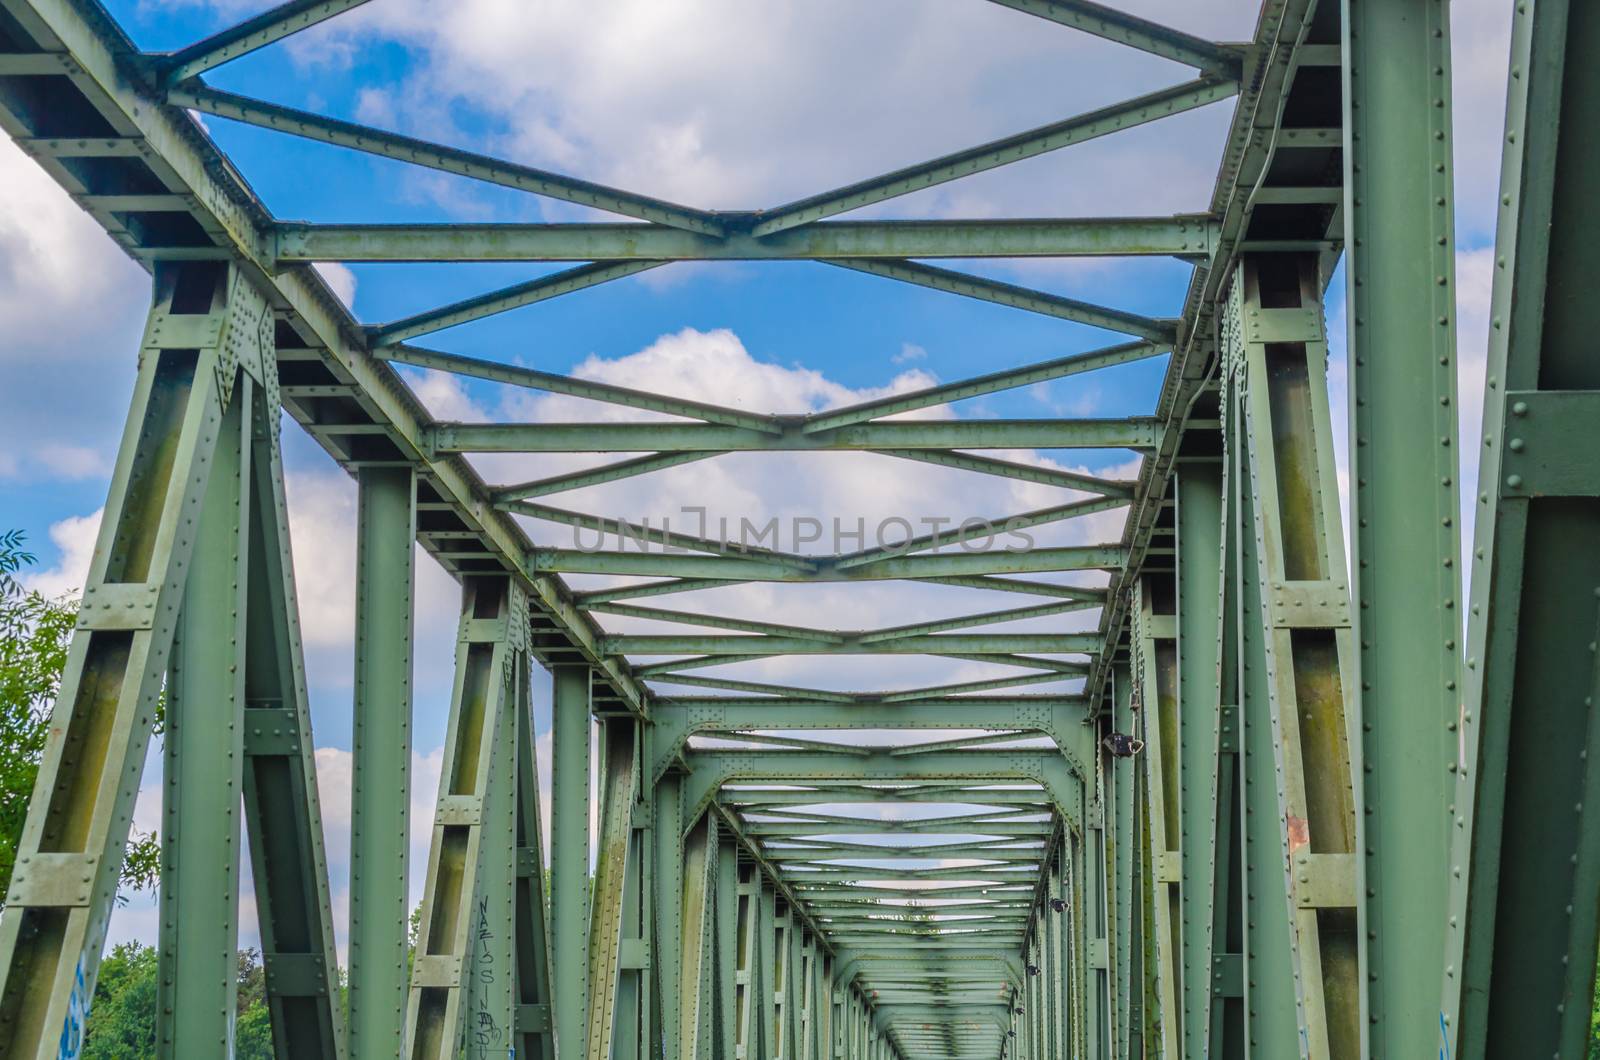 Riveted Steel Bridge by JFsPic